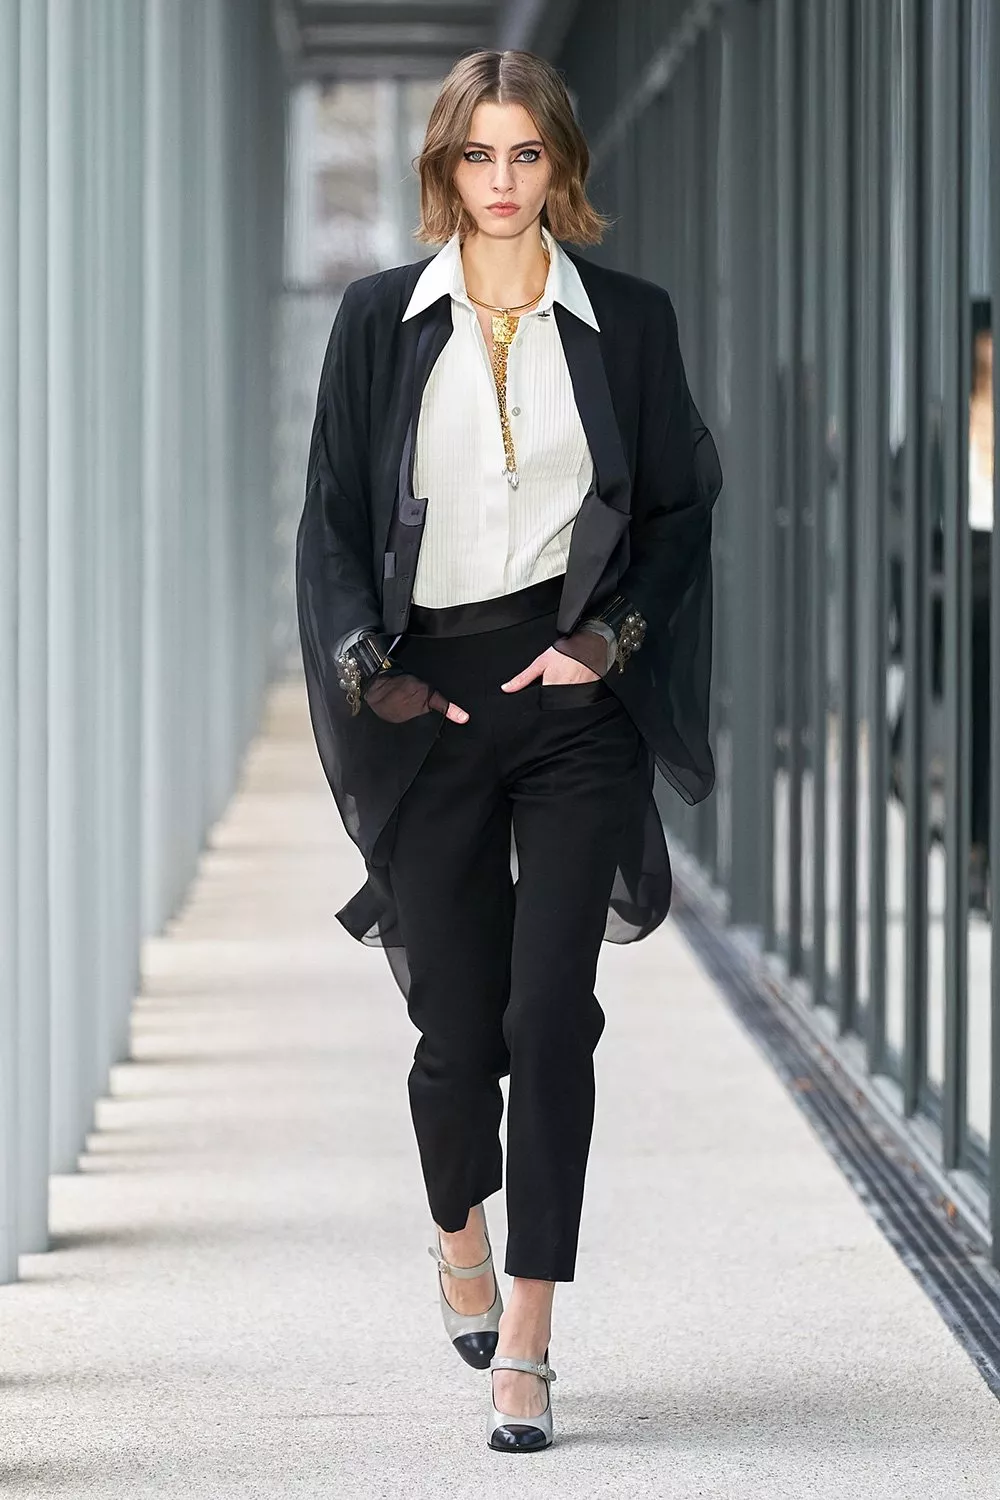 Chanel تقدّم مجموعة Métiers d’art 2021-2022 وتحتفل بإبداعات حرفيّيها الموهوبين